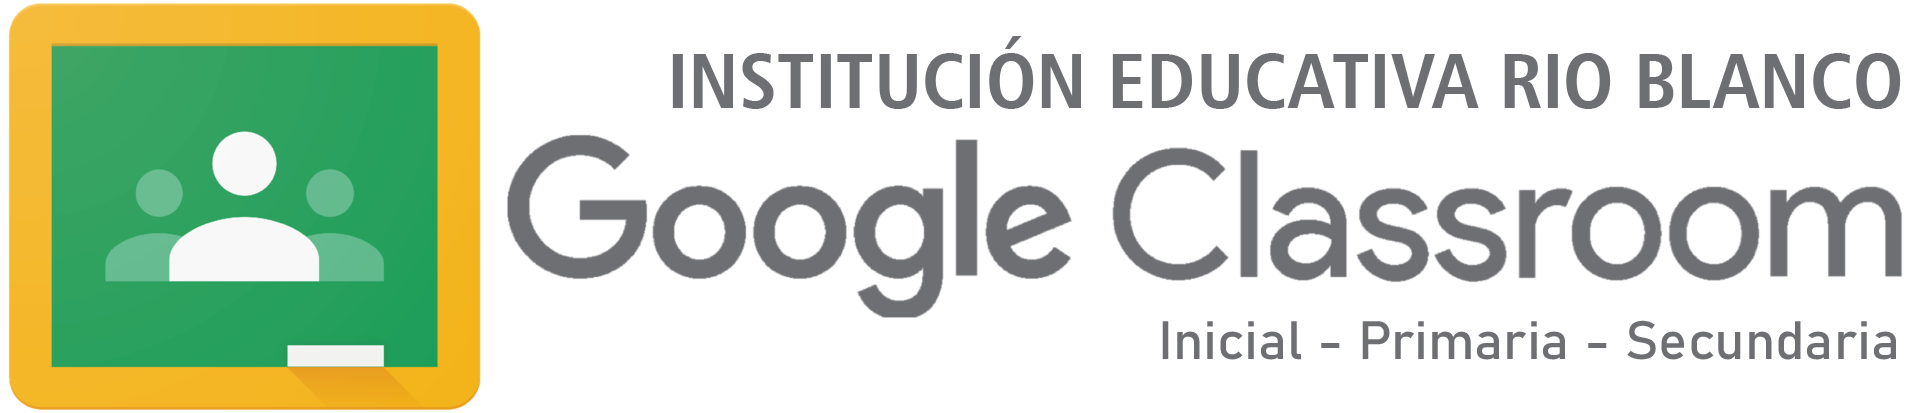 Google Classroom - IE RIO BLANCO - 2021